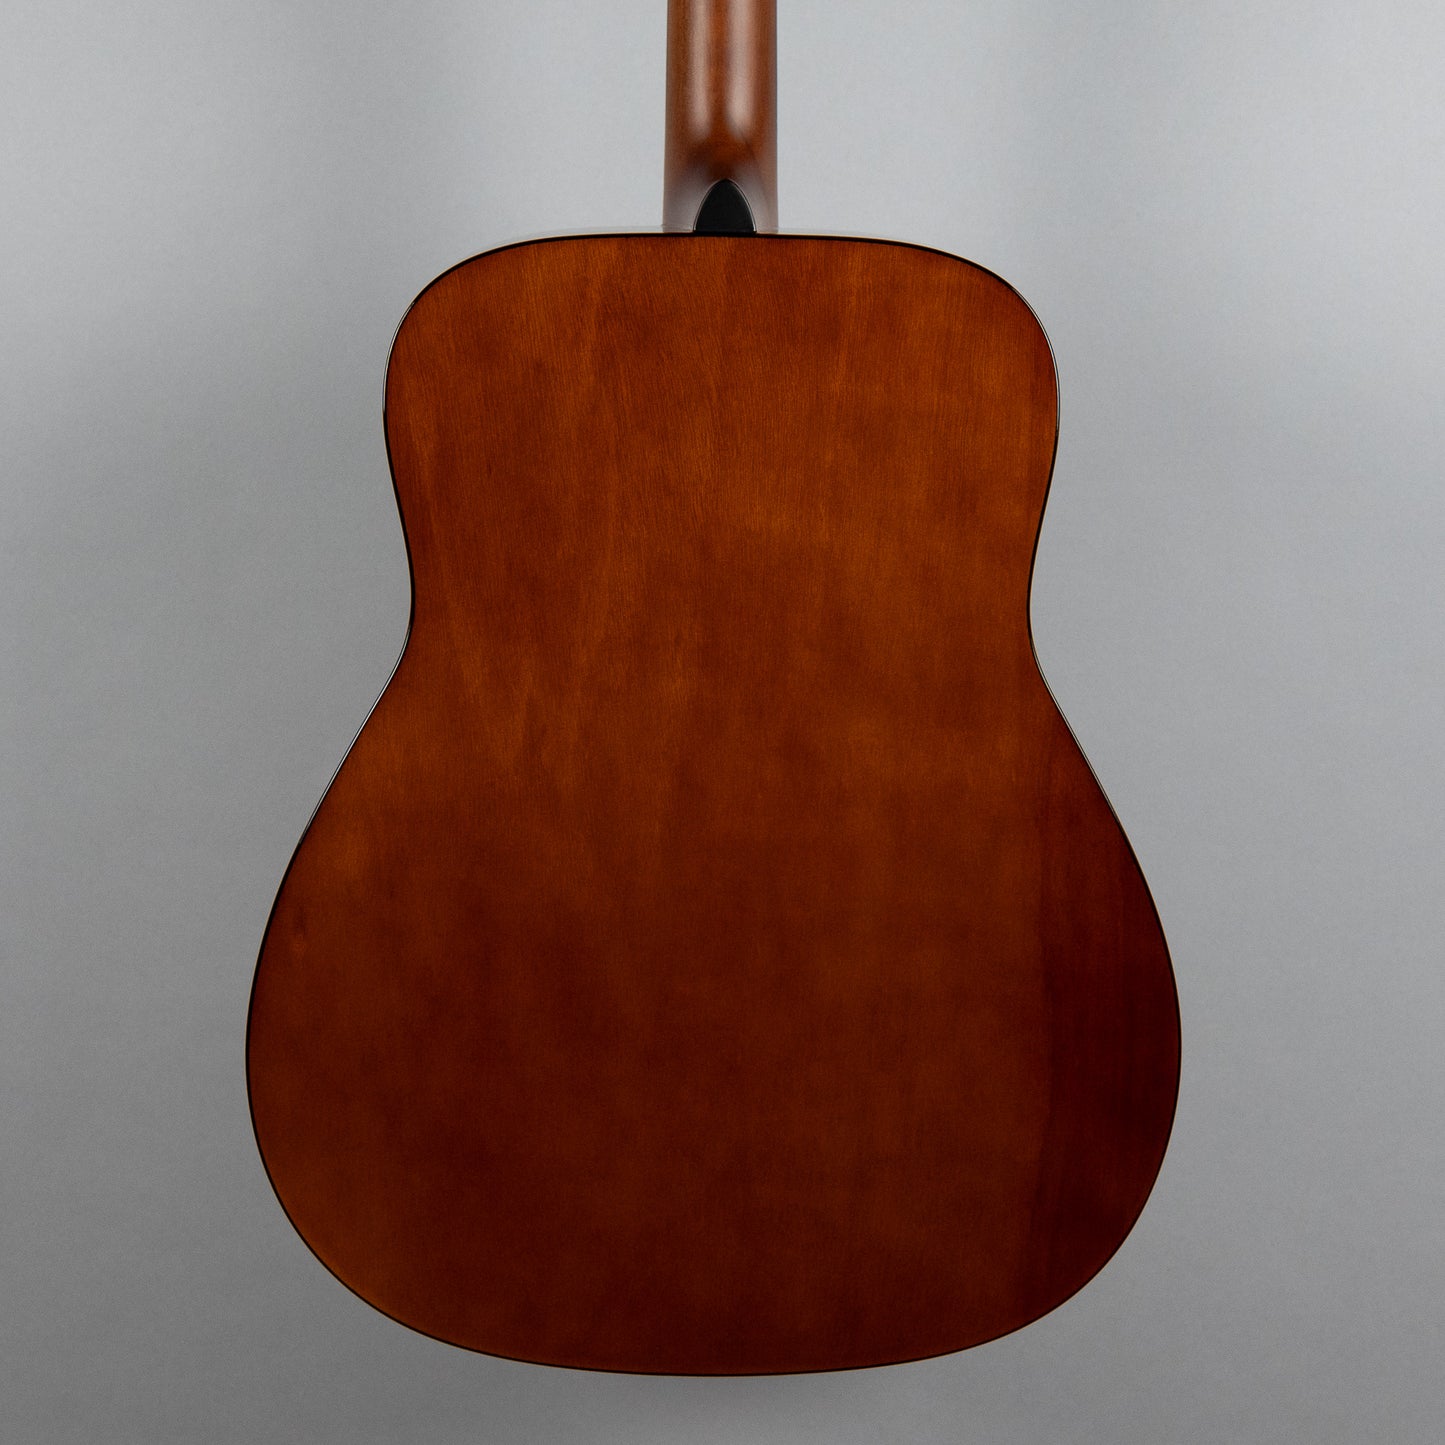 Yamaha FG800J Acoustic Guitar in Natural